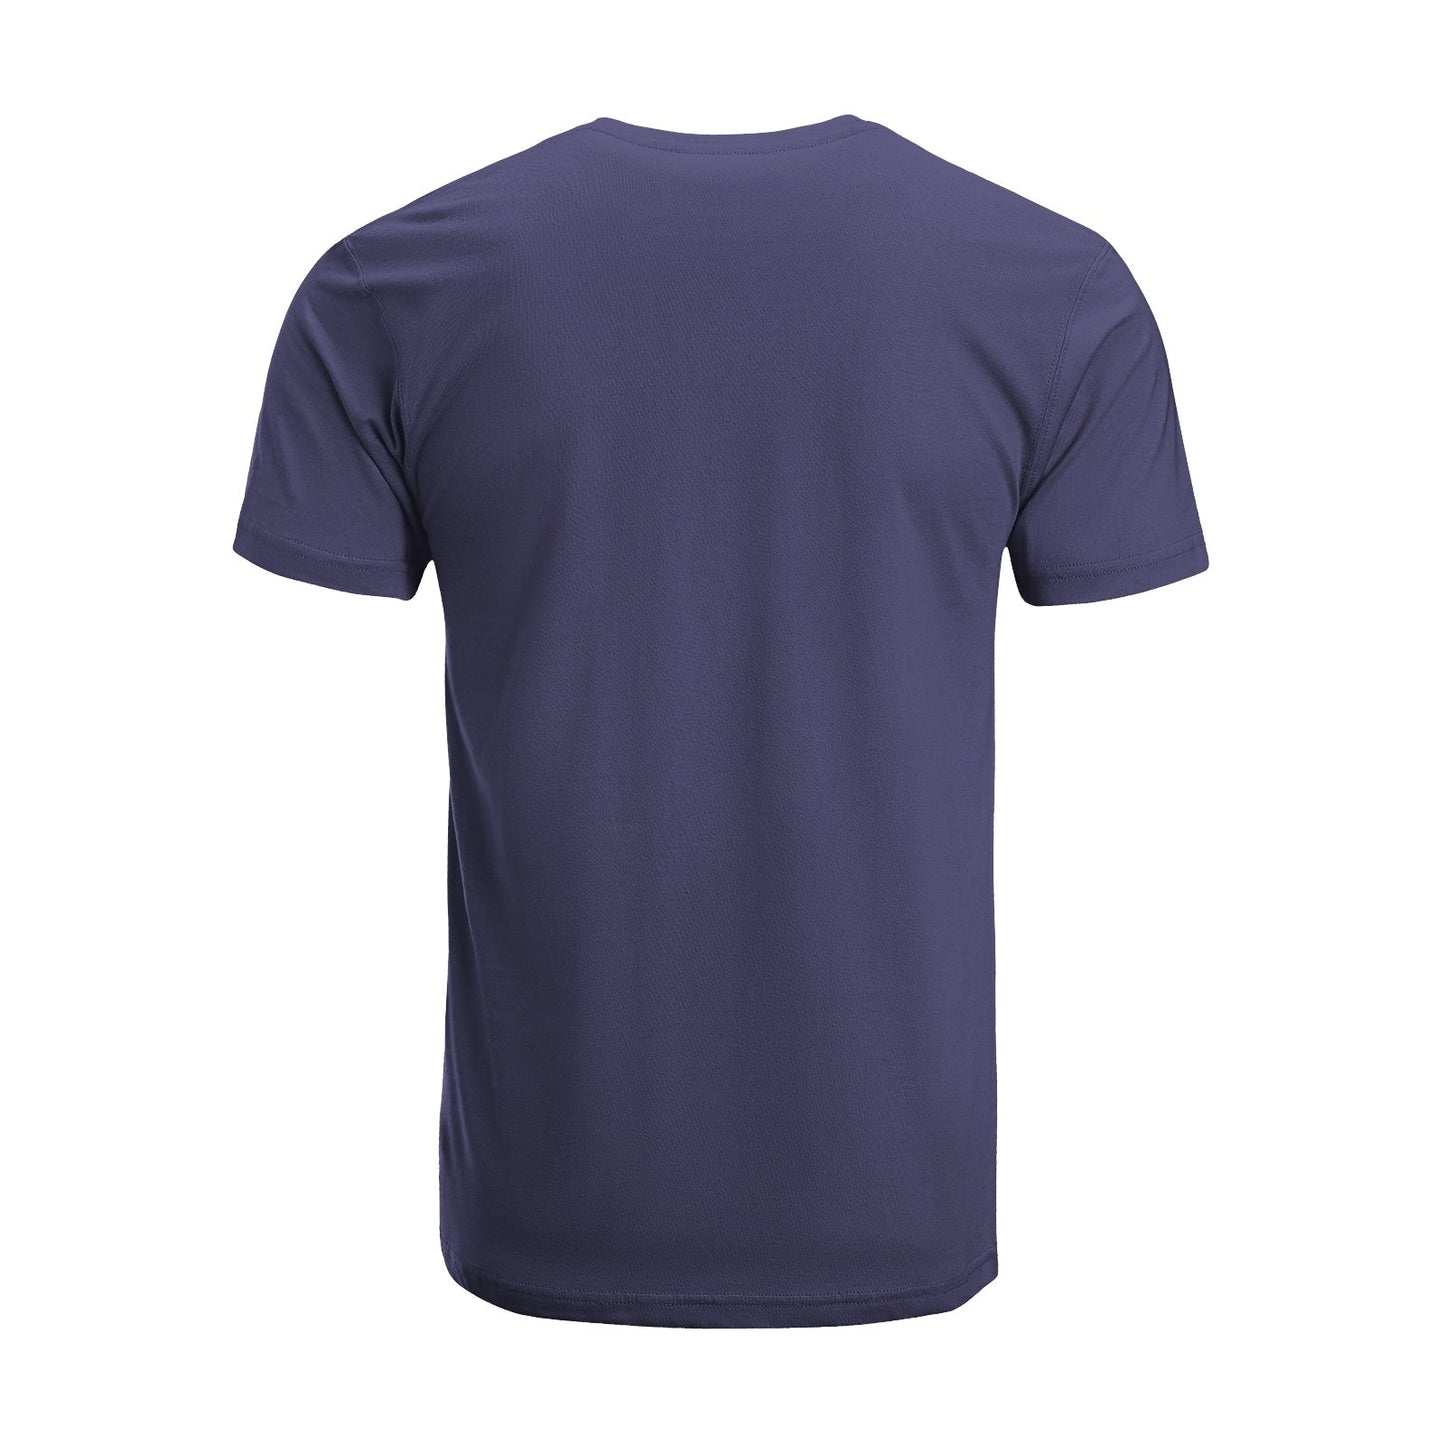 Unisex Short Sleeve Crew Neck Cotton Jersey T-Shirt CAT 27 - Tara-Outfits.com